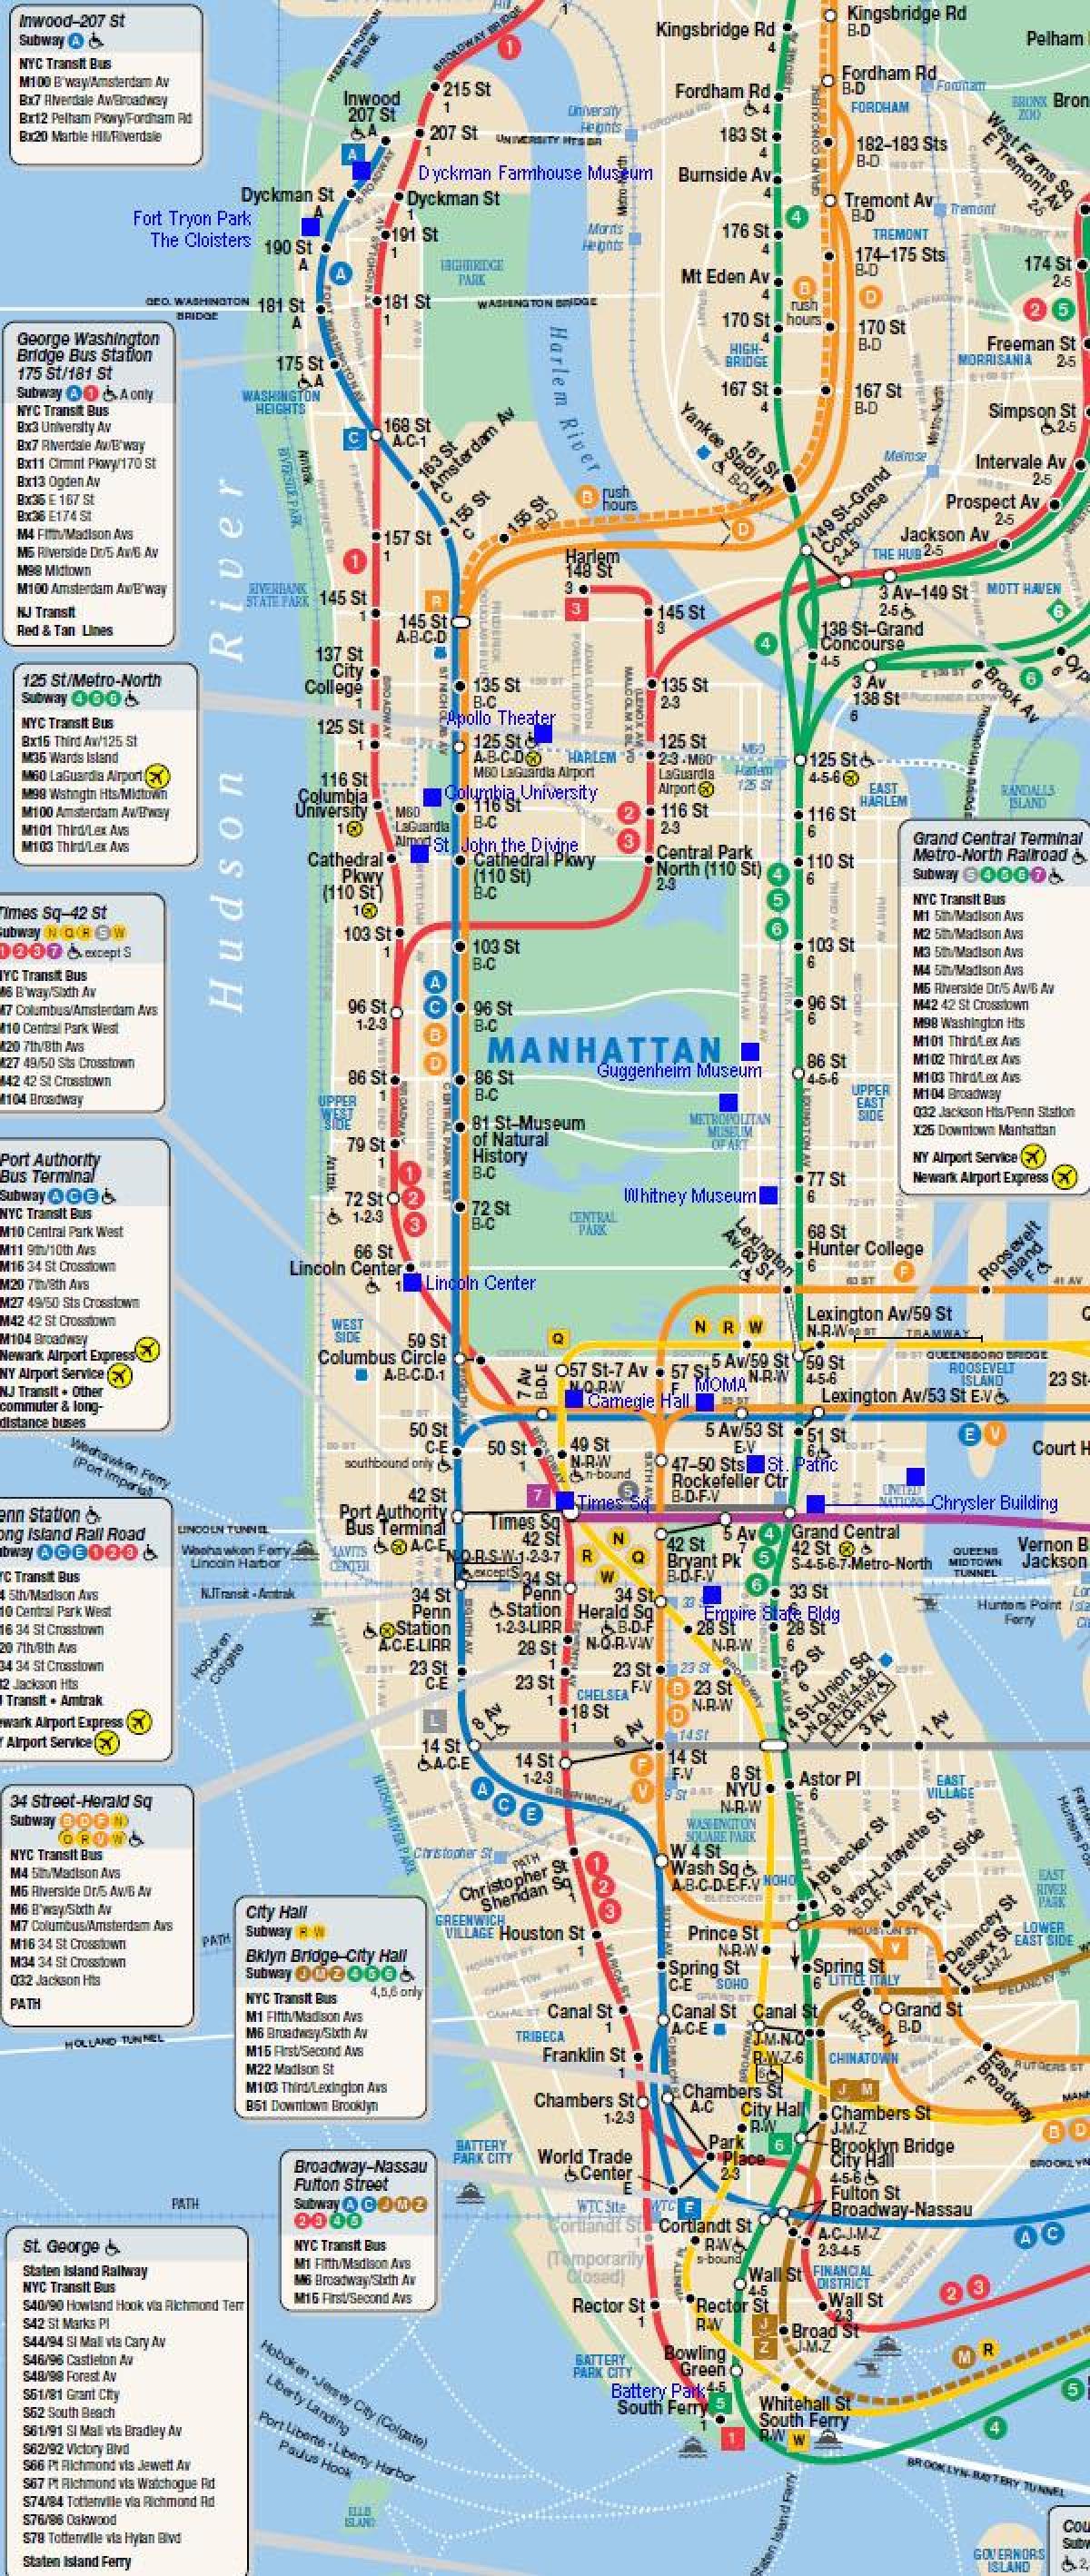 Manhattan ferrocarril mapa